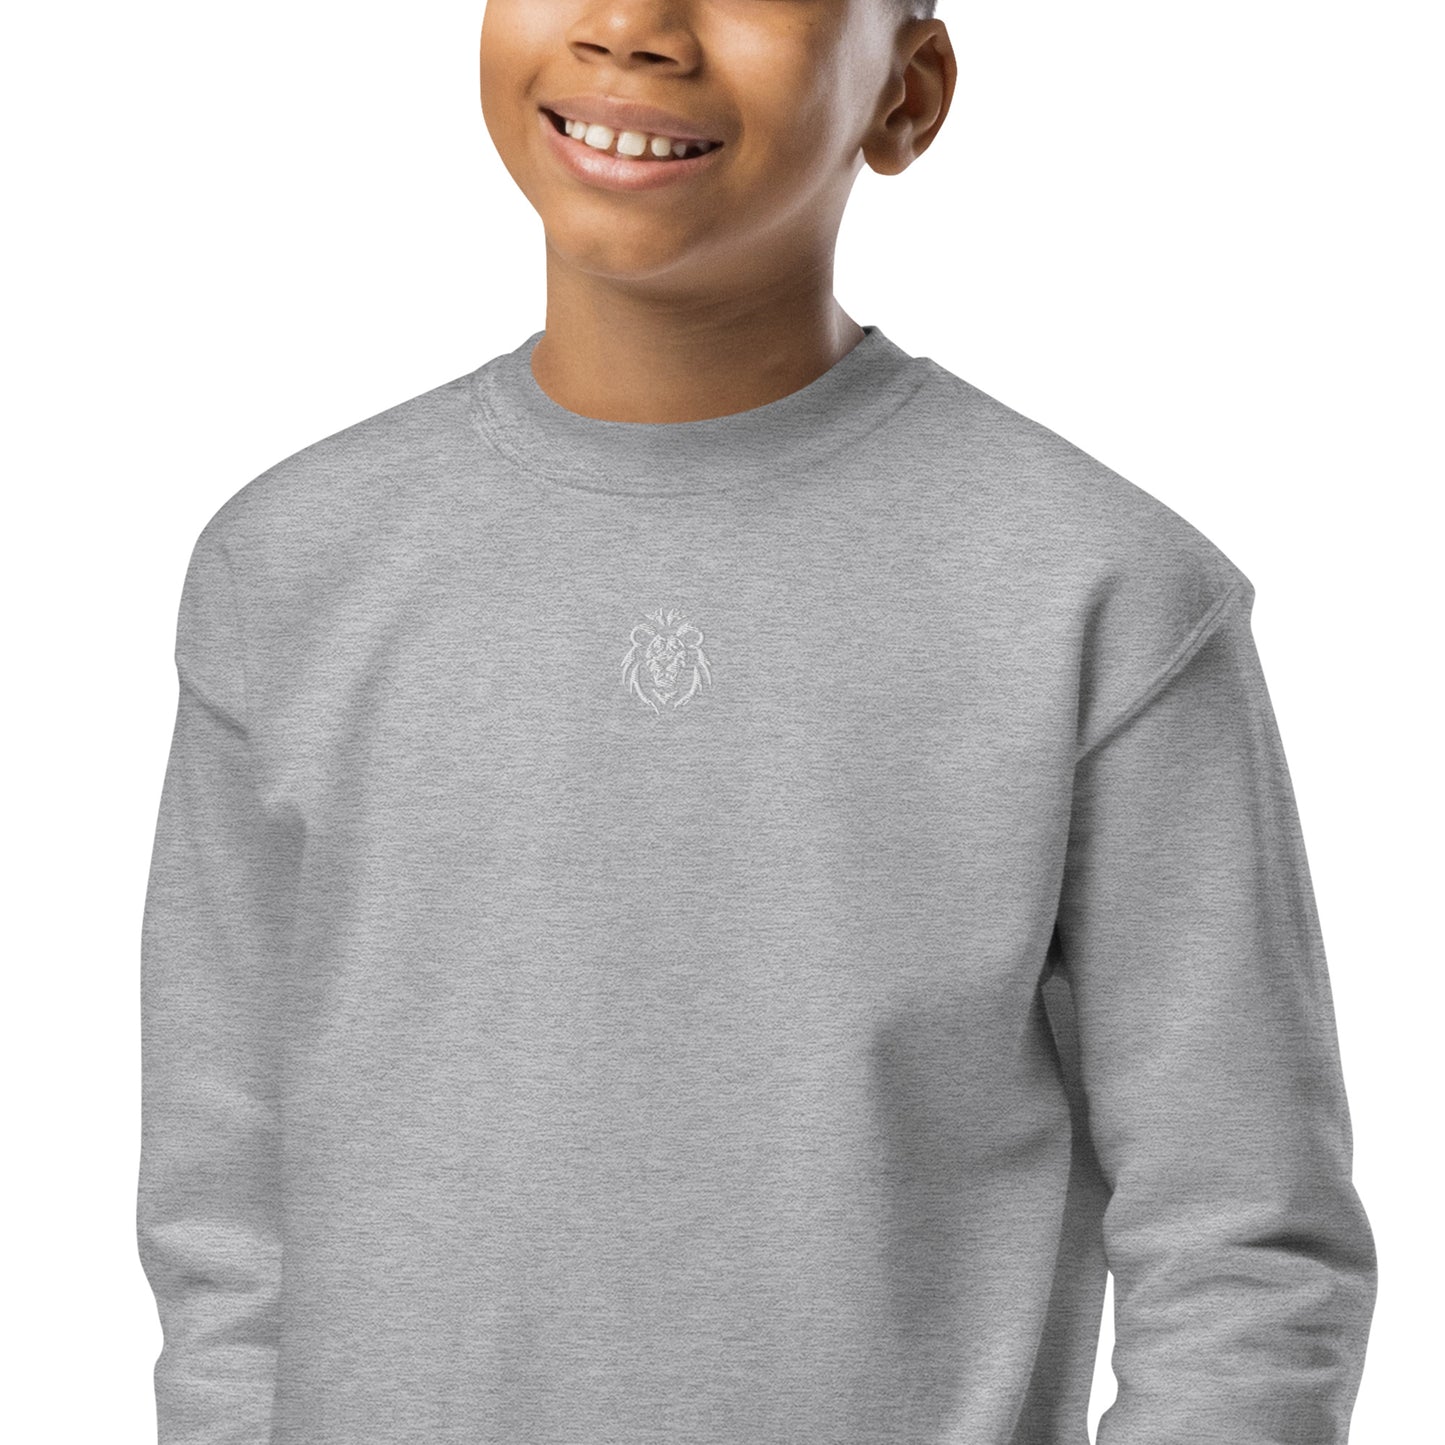 Youth crewneck LionHeart sweatshirt